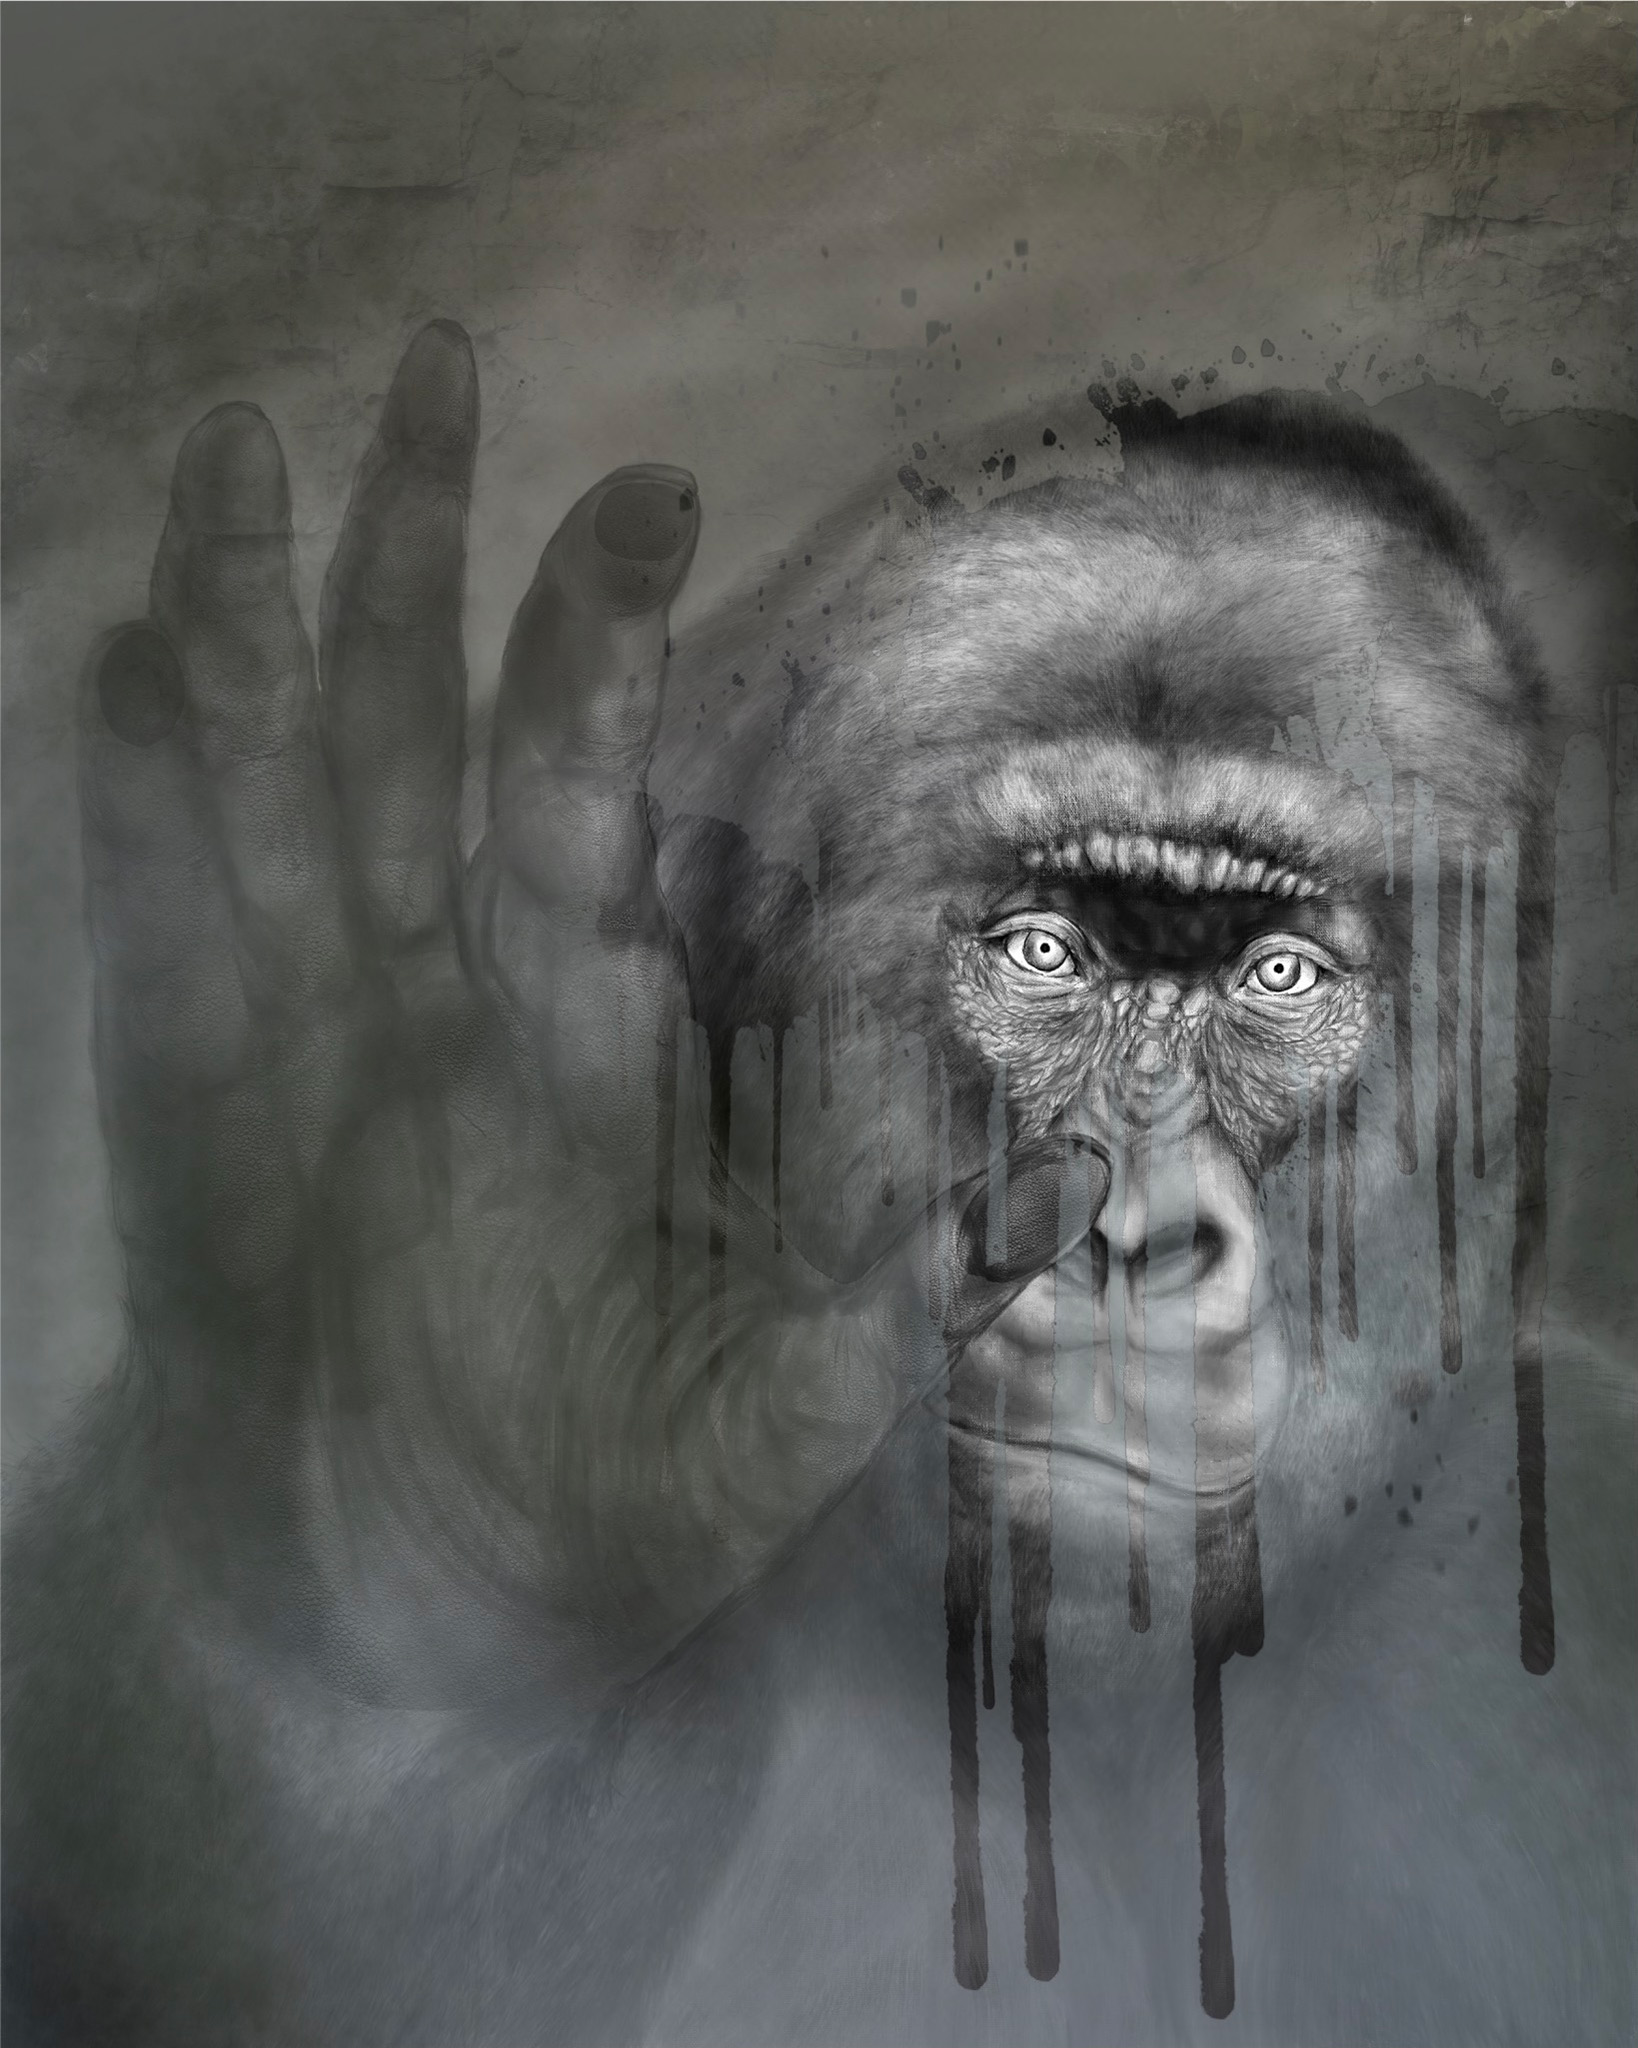 Gorilla behind glass all in black and grey. Drawn digitally using procreate.